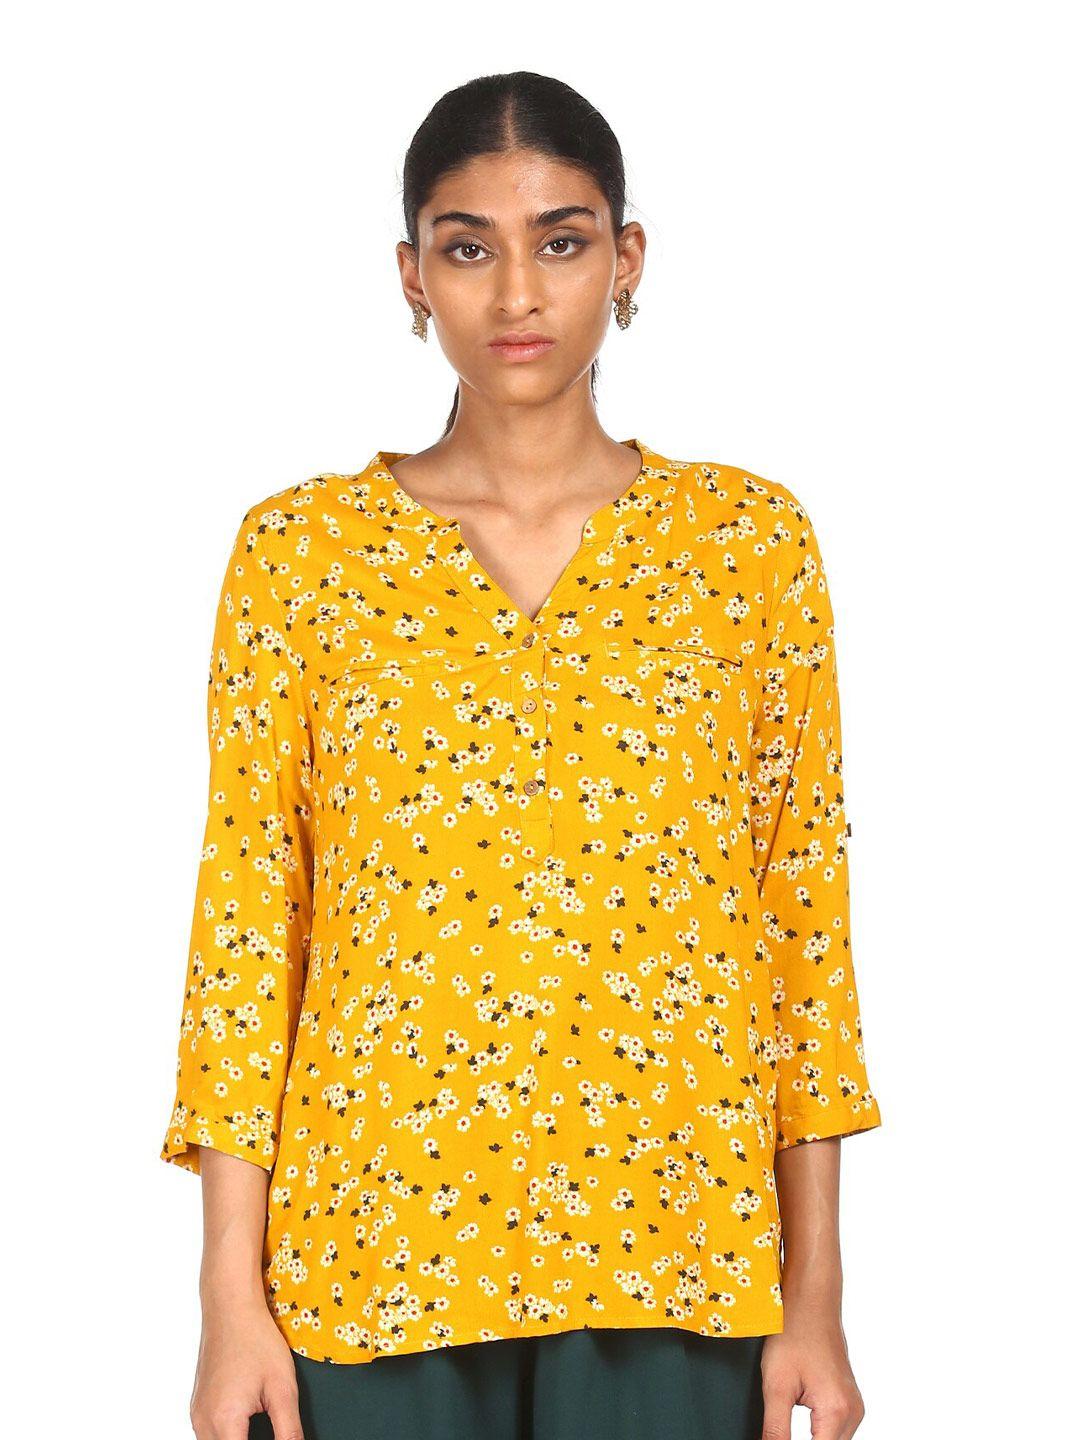 cherokee mustard yellow floral mandarin collar shirt style top